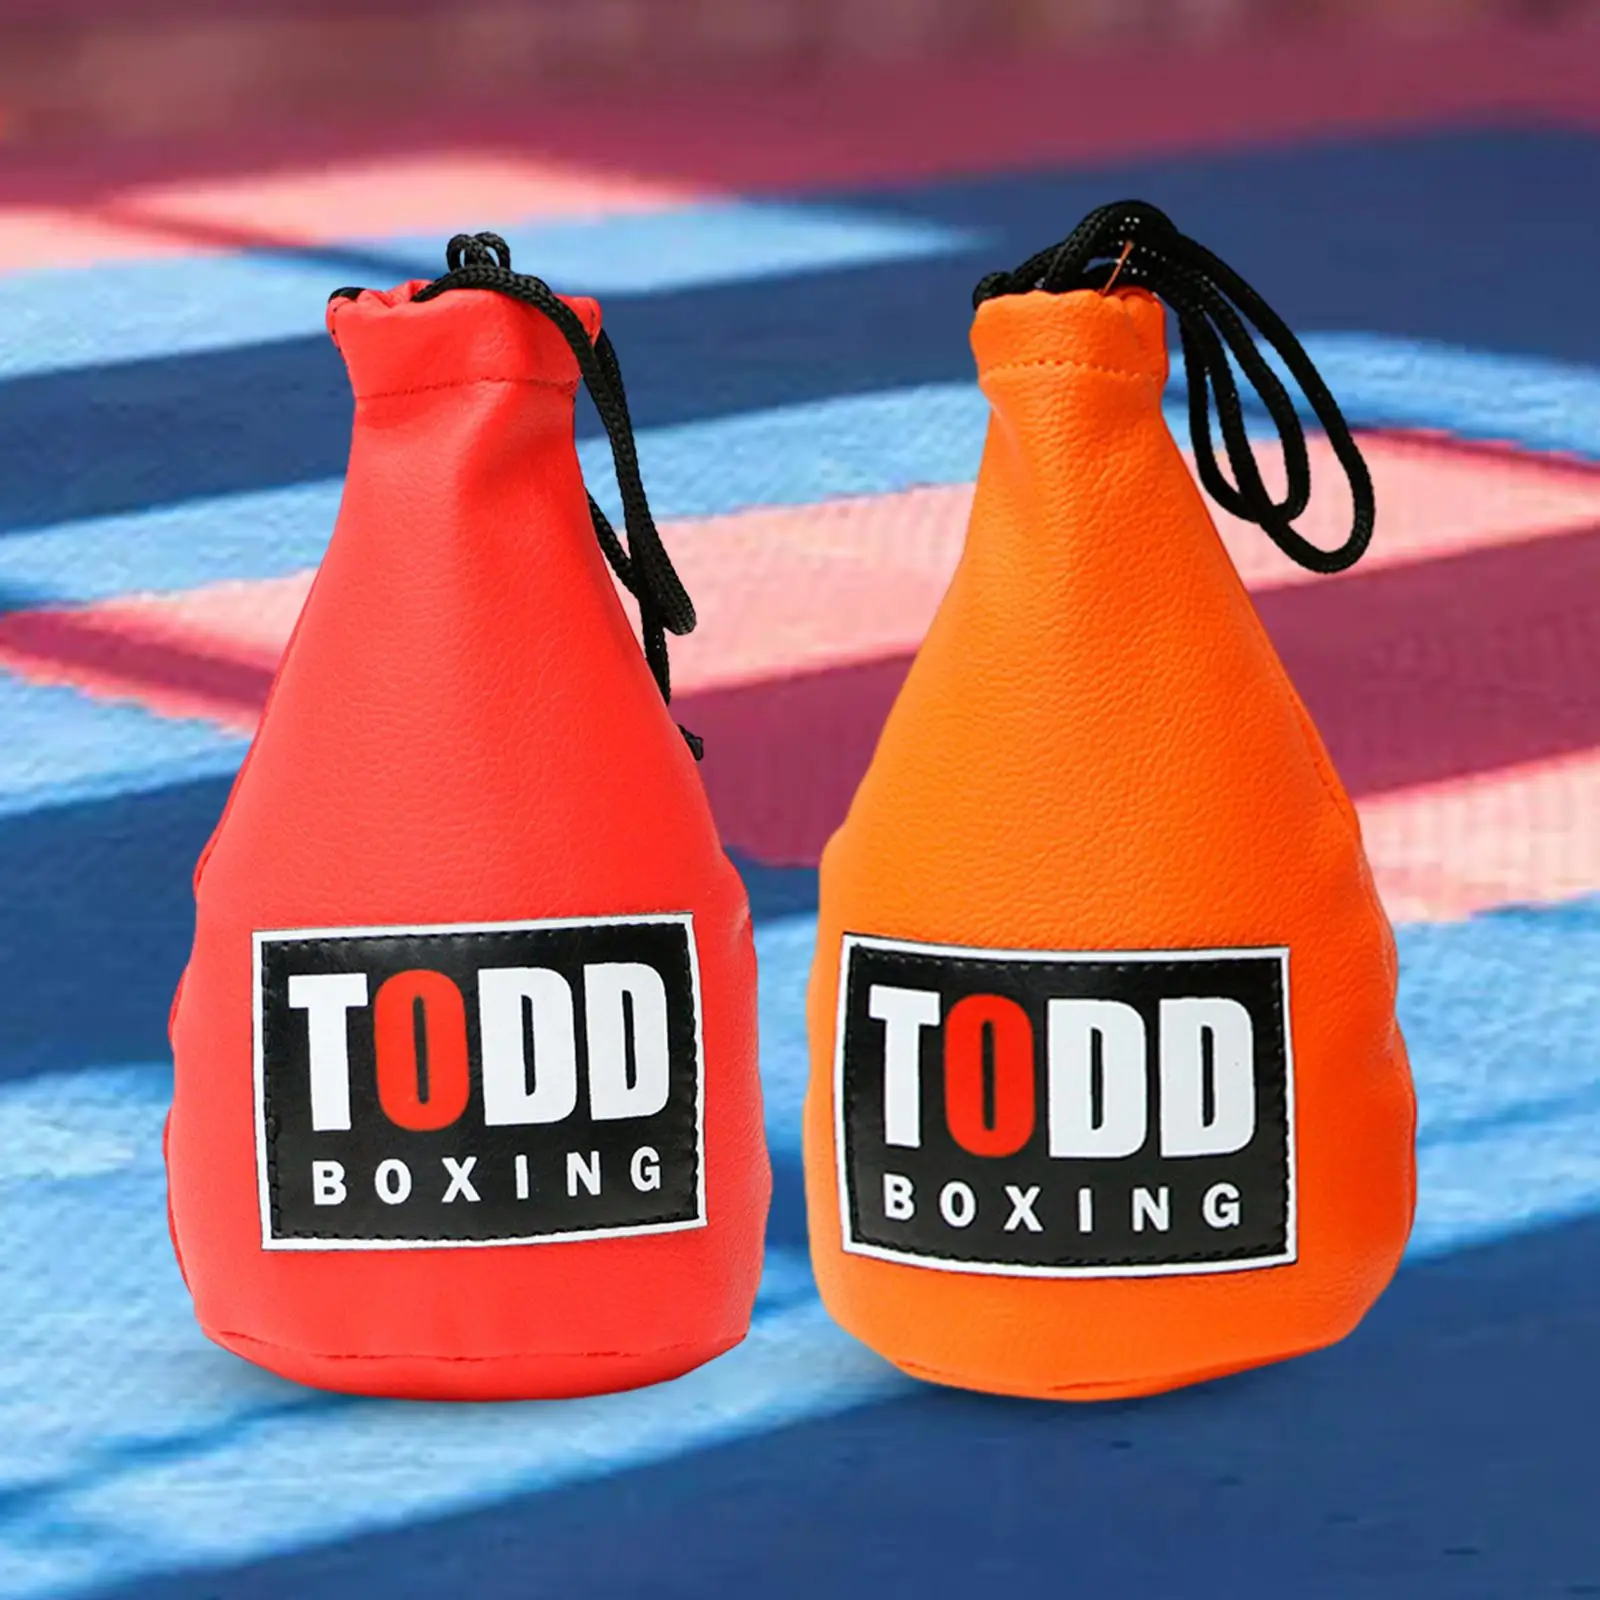 Boxing Dodge Speed Bag Punching Bag Punch Exercise Dodge Reaction Bag for Hand Eye Coordination Muay Thai Karate Sparring Indoor